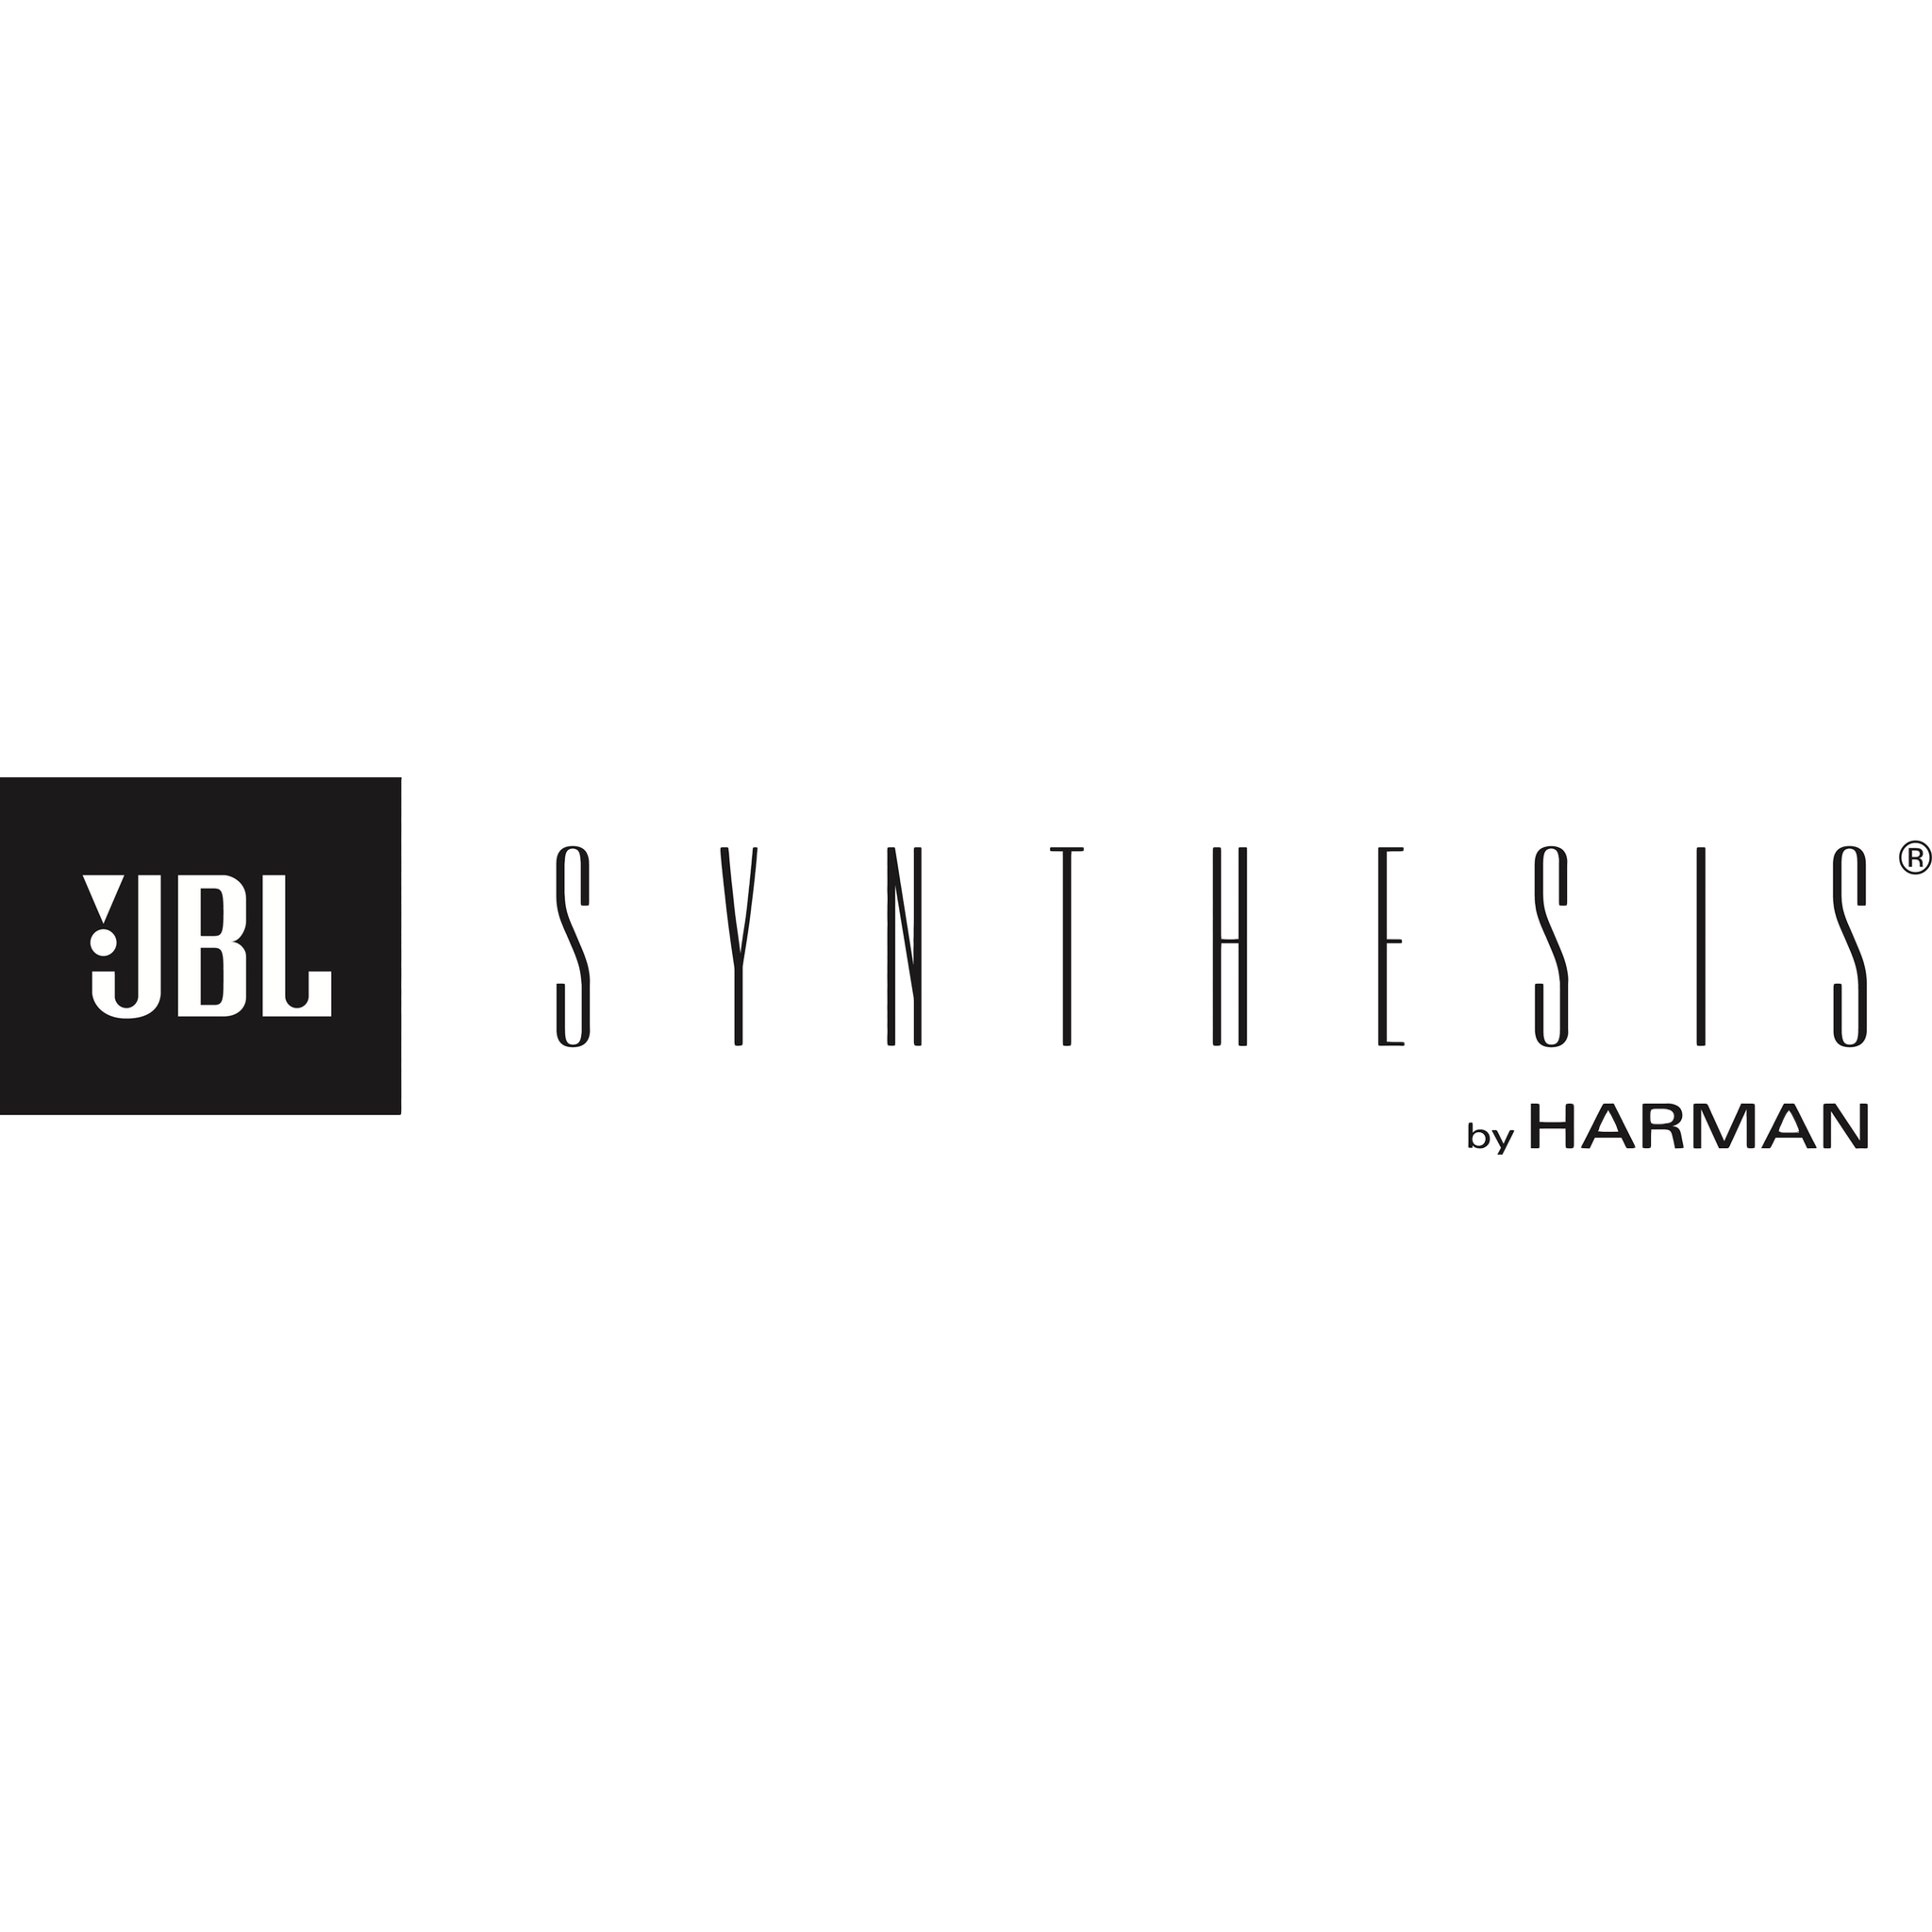 JBL Synthesis logo